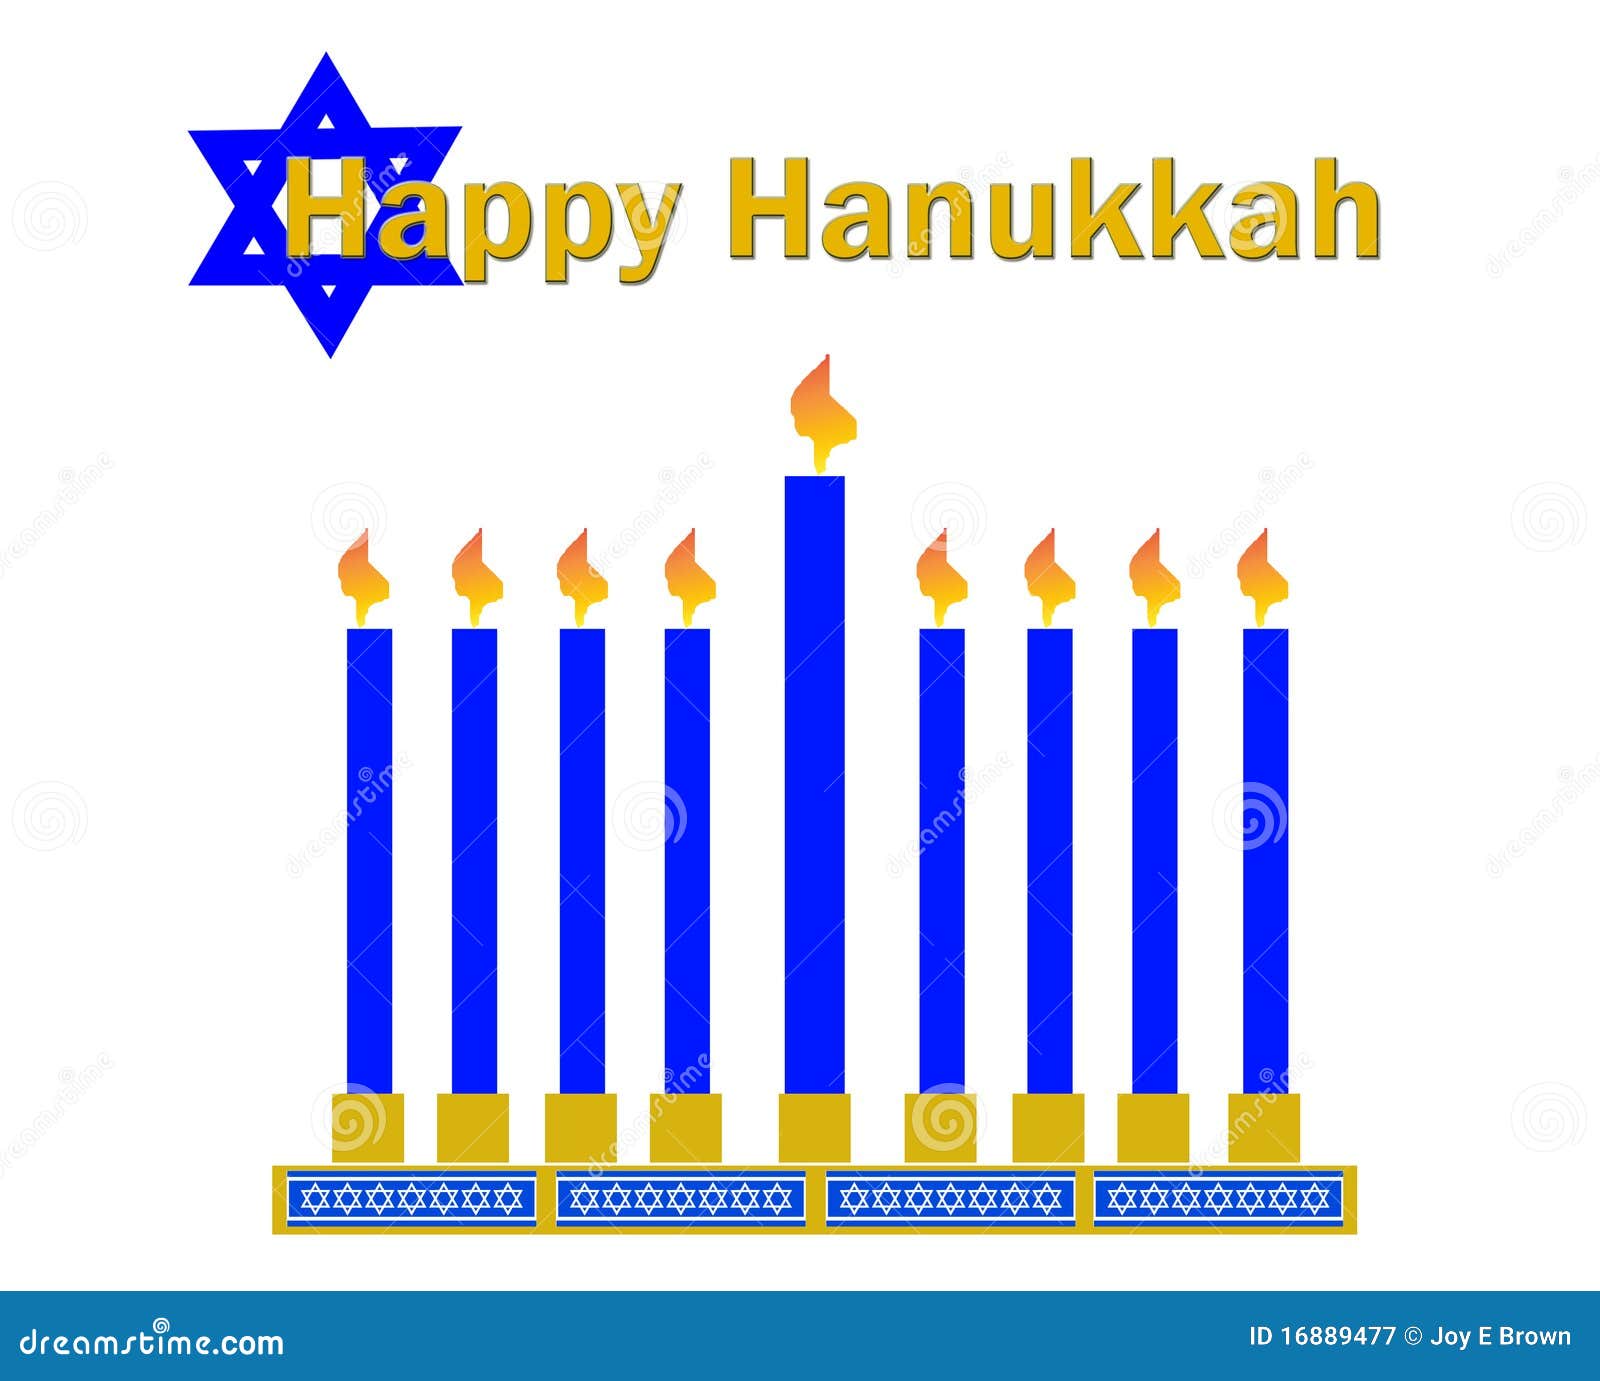 clip art happy hanukkah - photo #20